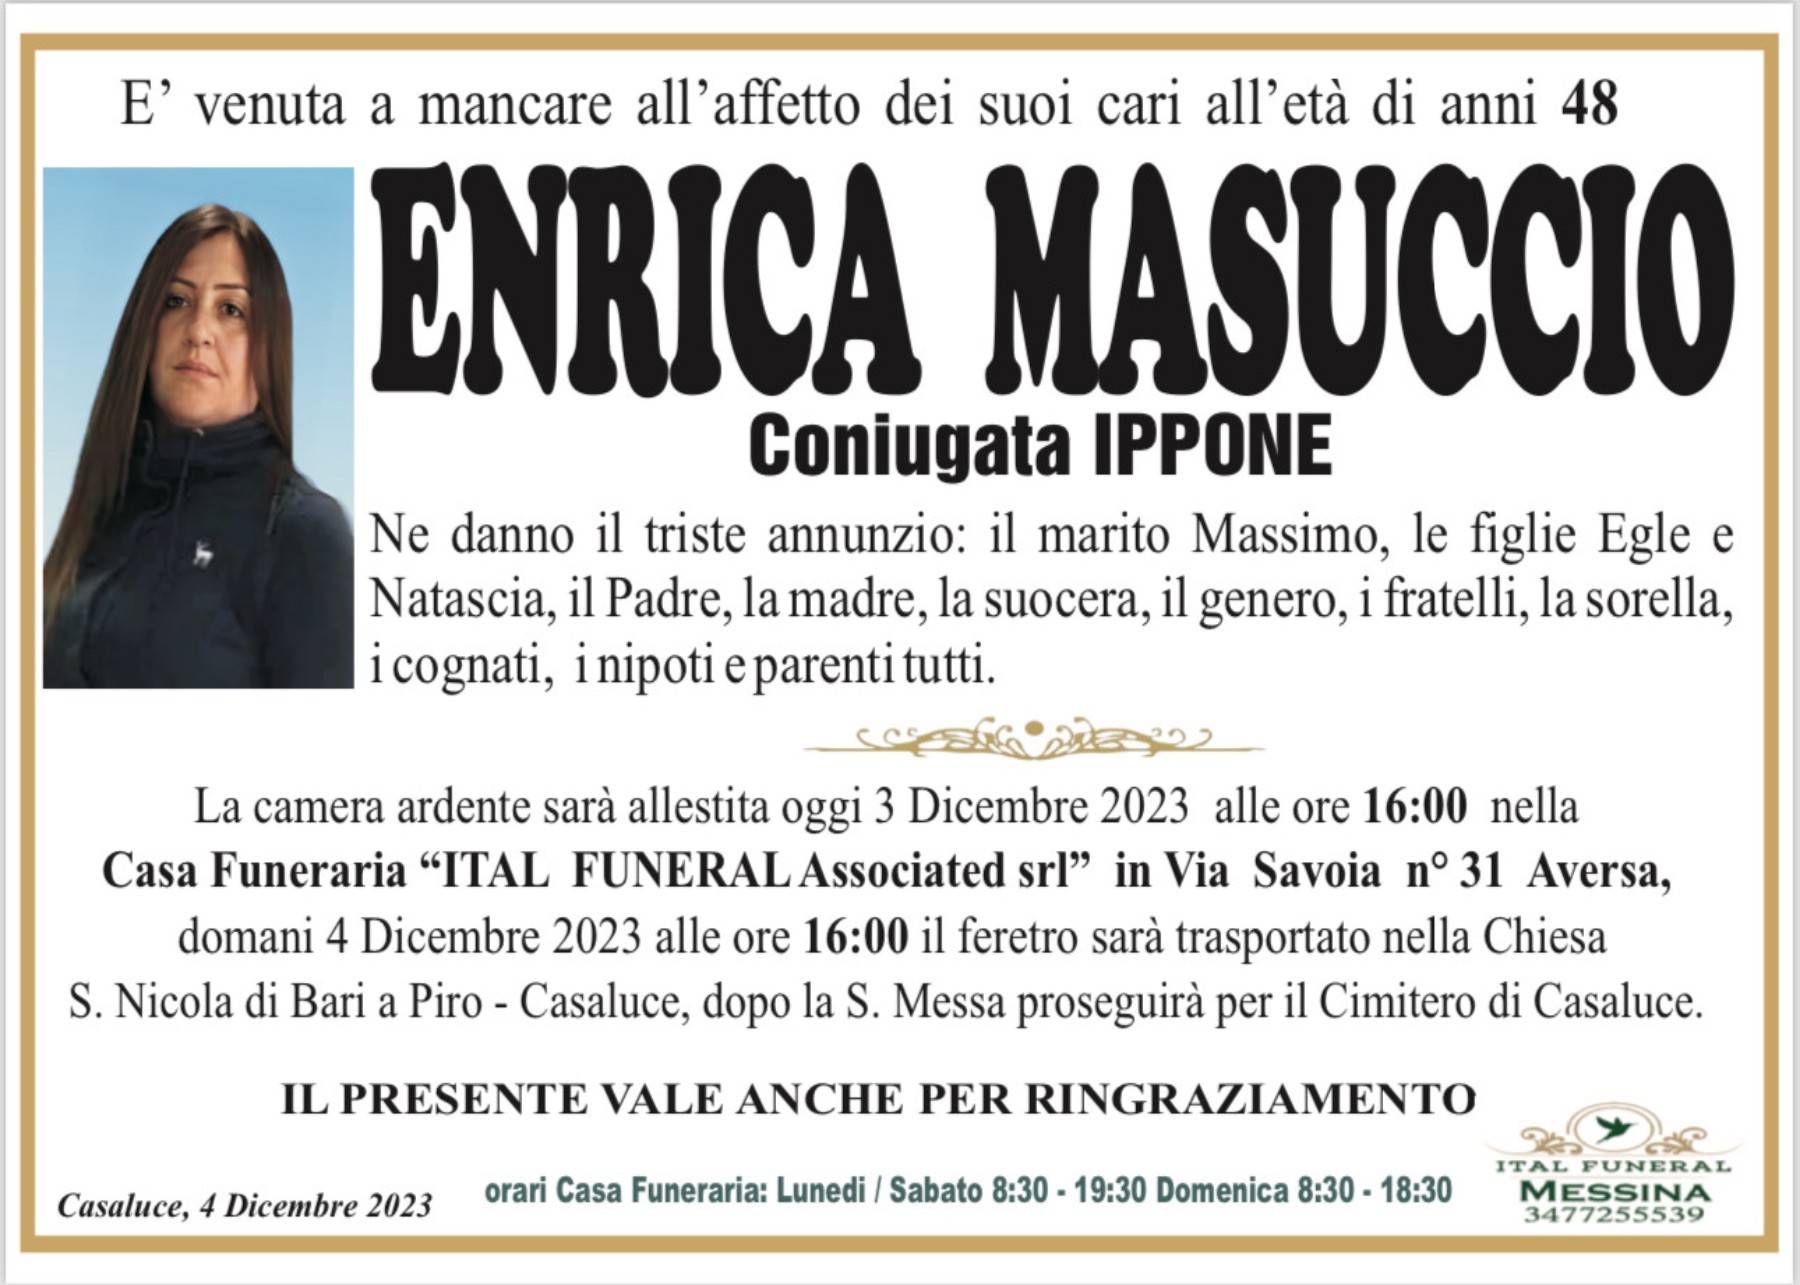 Enrica Masucci